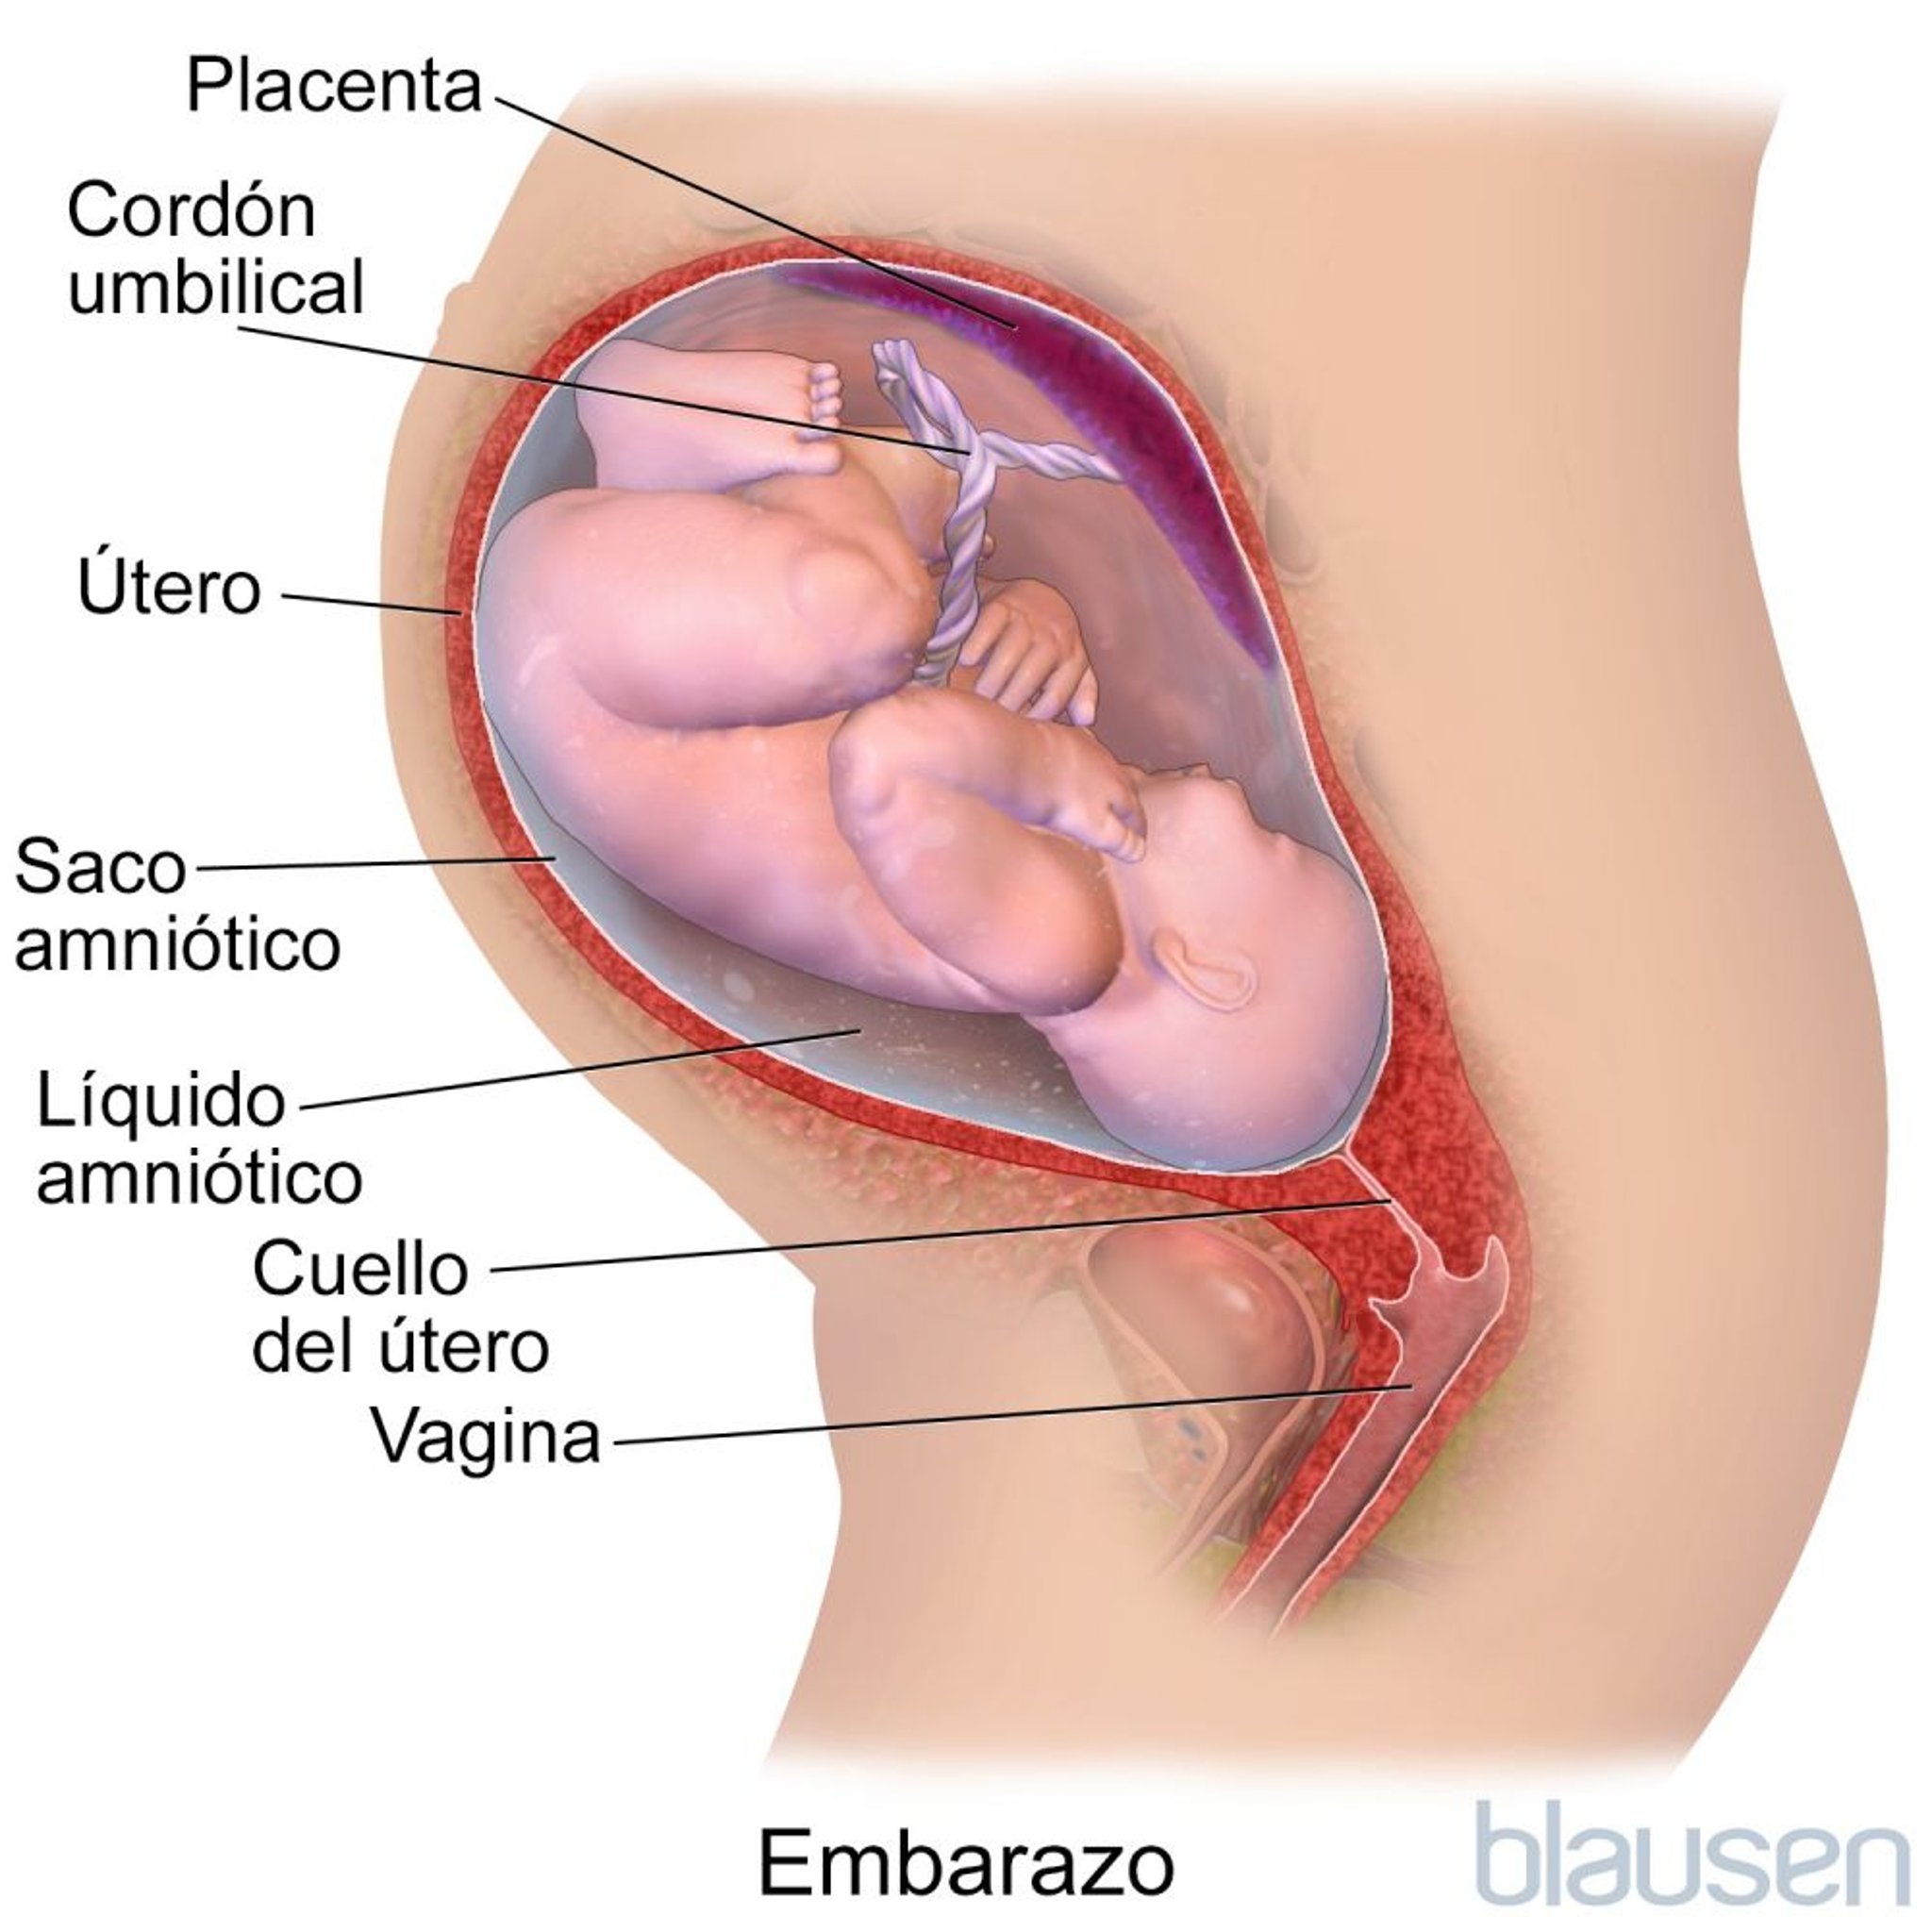 Embarazo